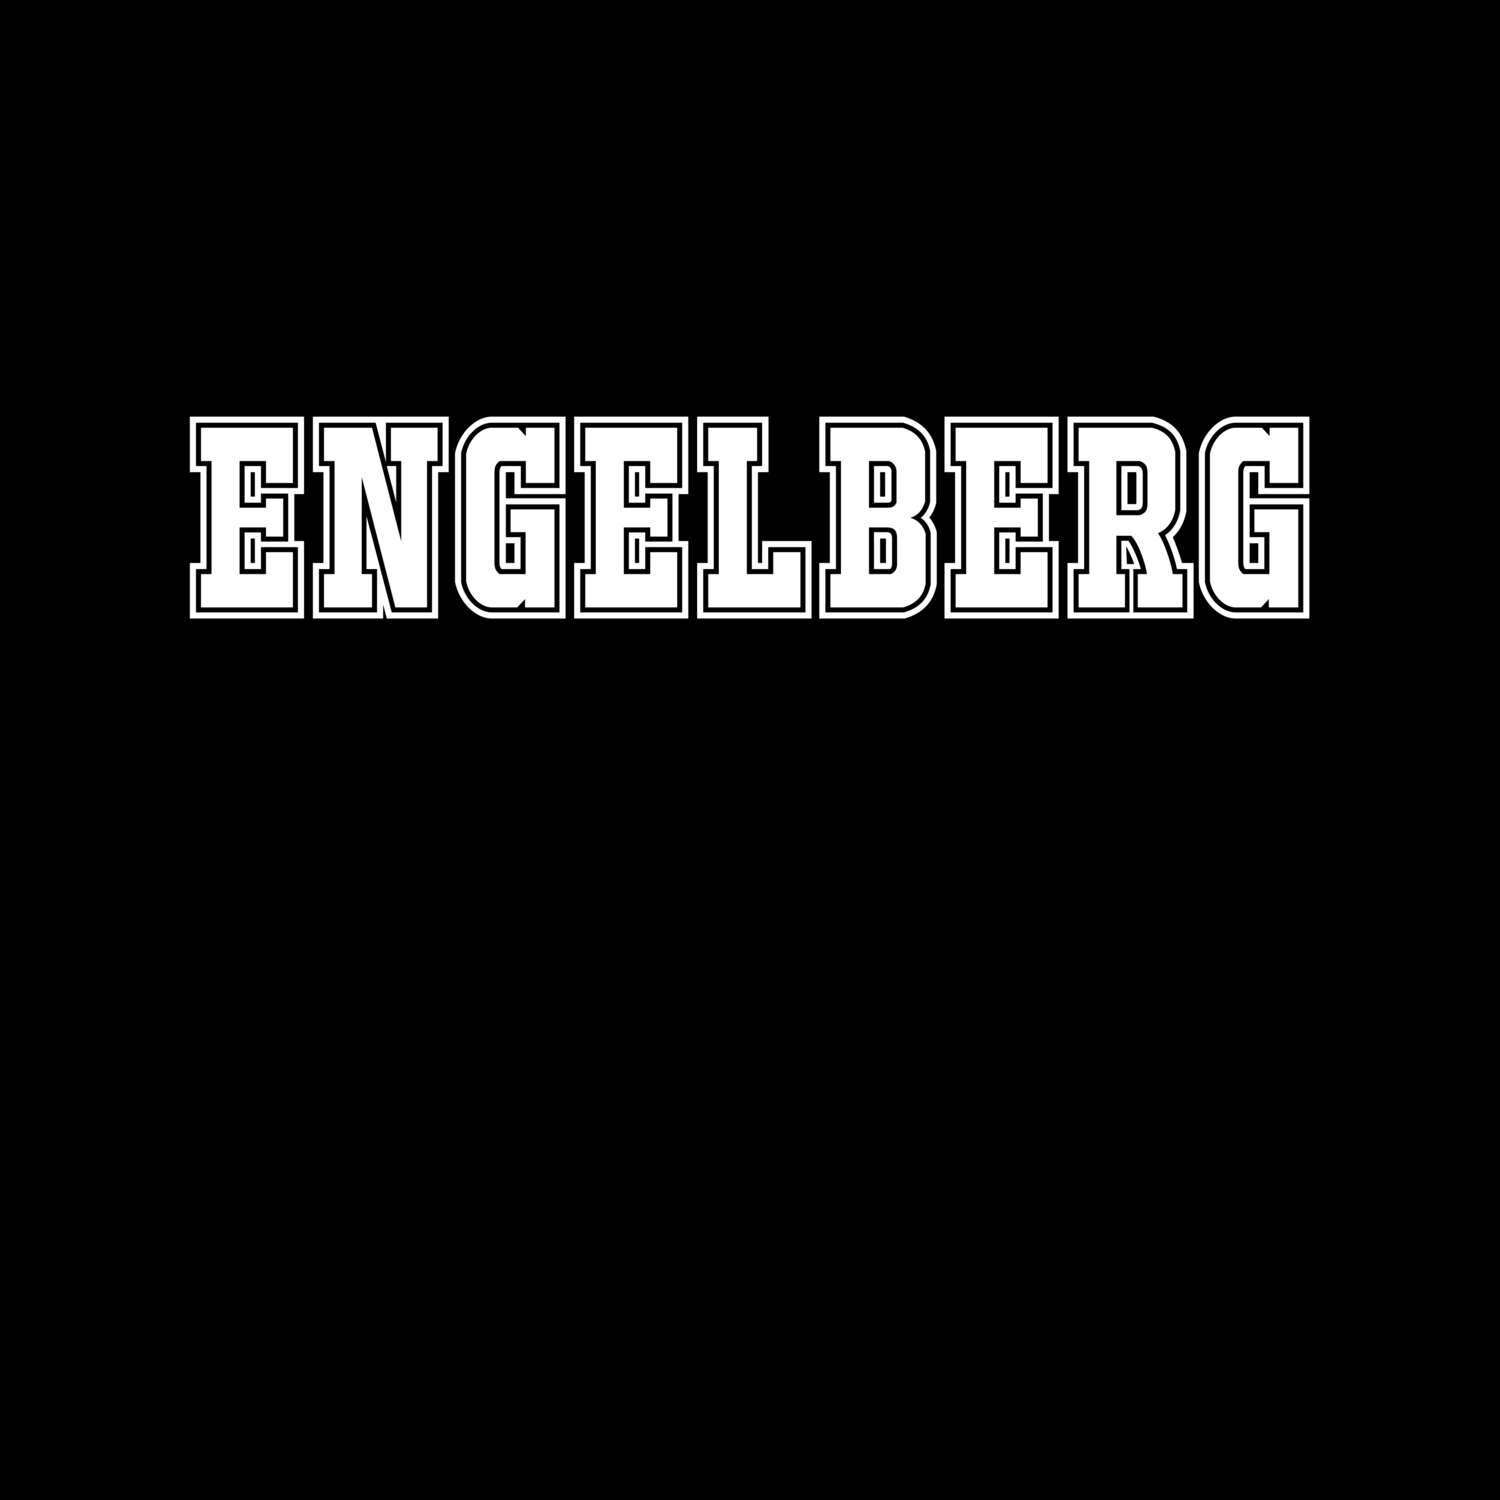 Engelberg T-Shirt »Classic«